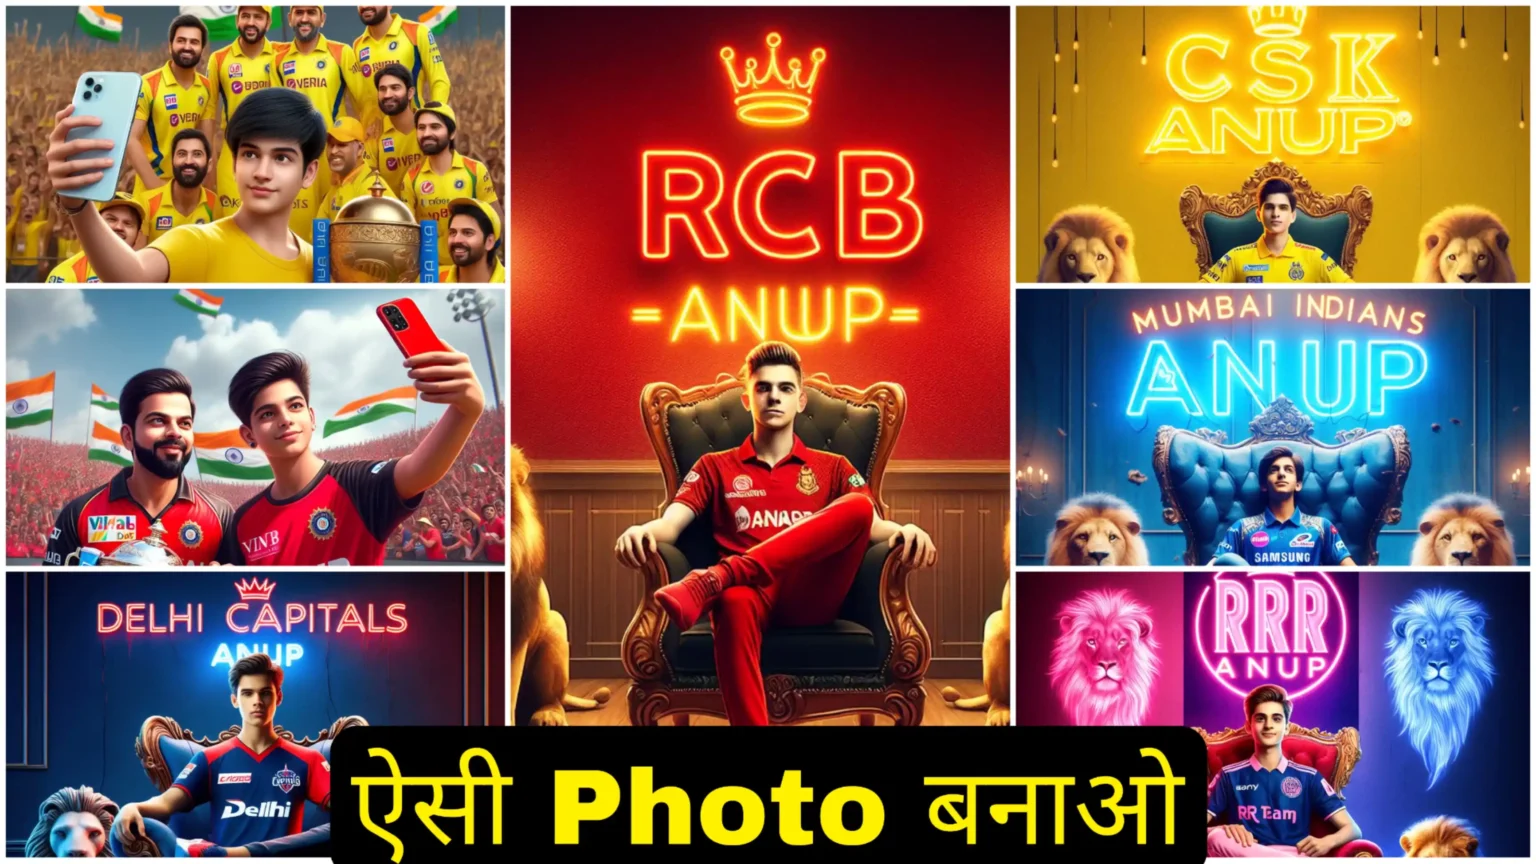 Bing AI IPL Cricket T Shirt Name Image Generator | Create Your Image